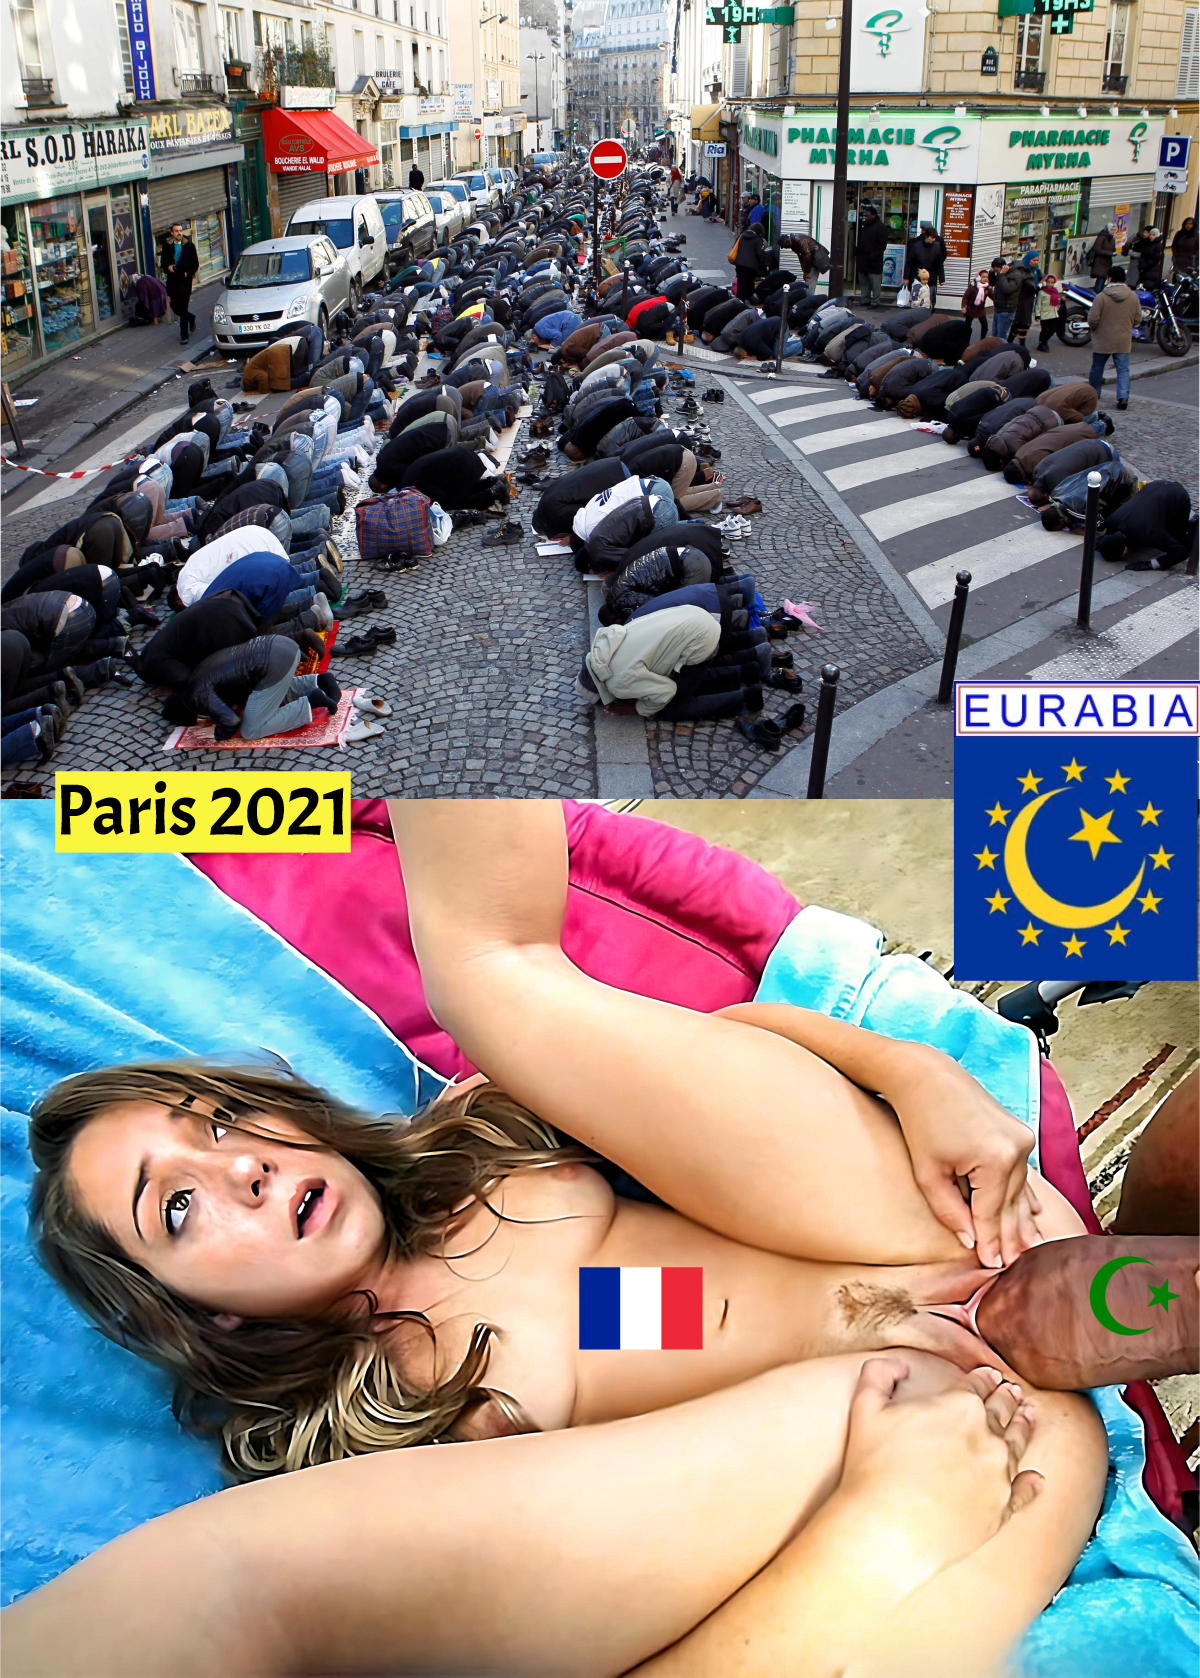 Islam Dominating France